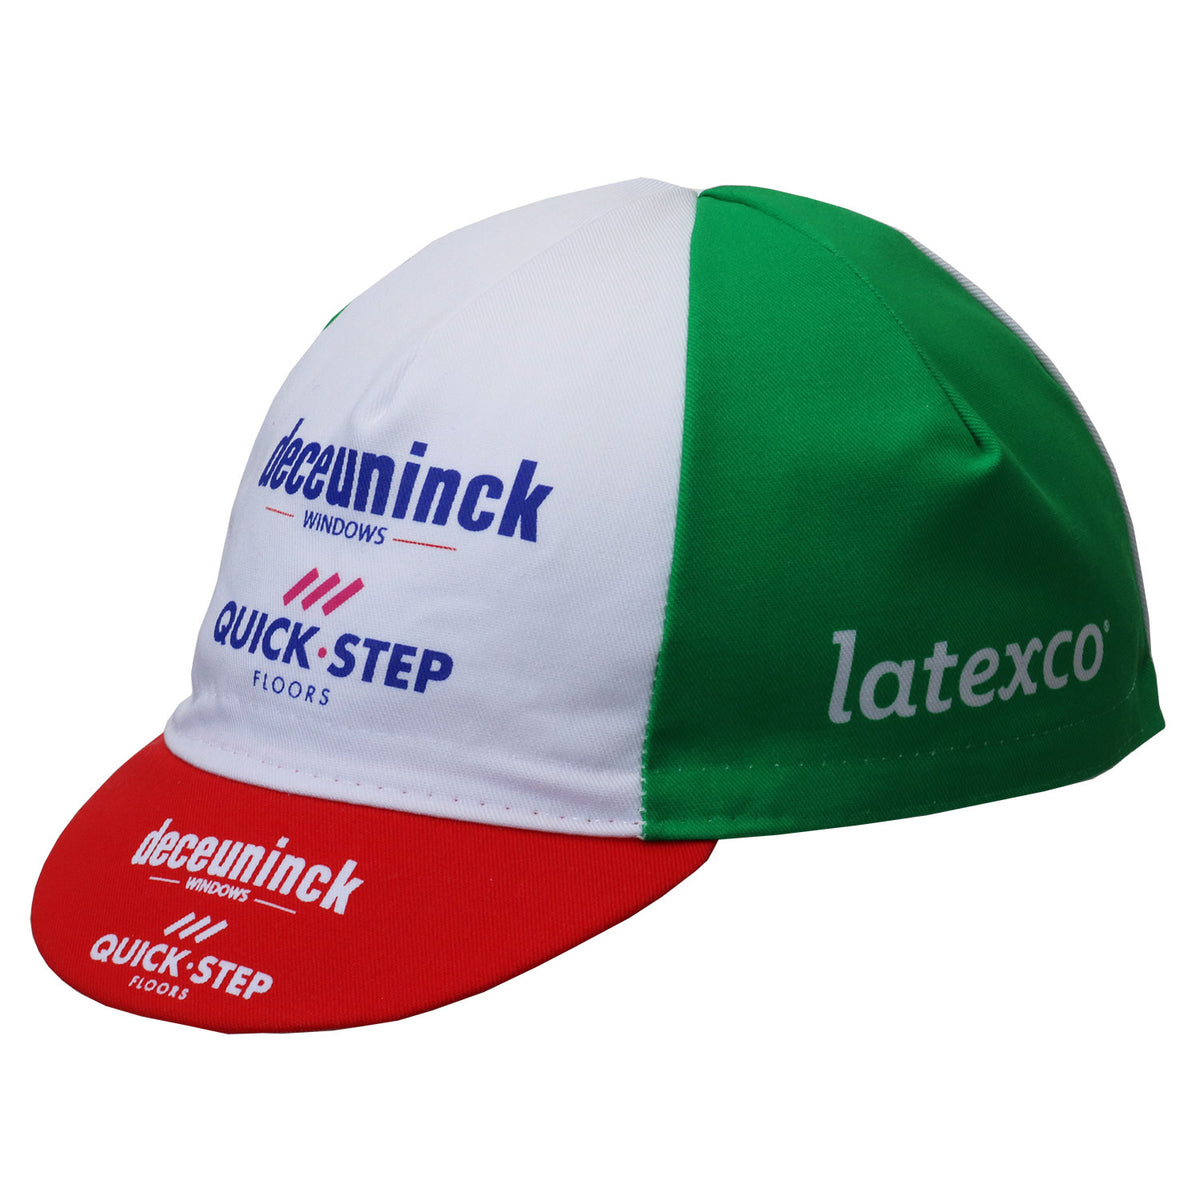 Deceuninck Quick Step Elia Viviani Italian Champion Team Cycling Cap ...